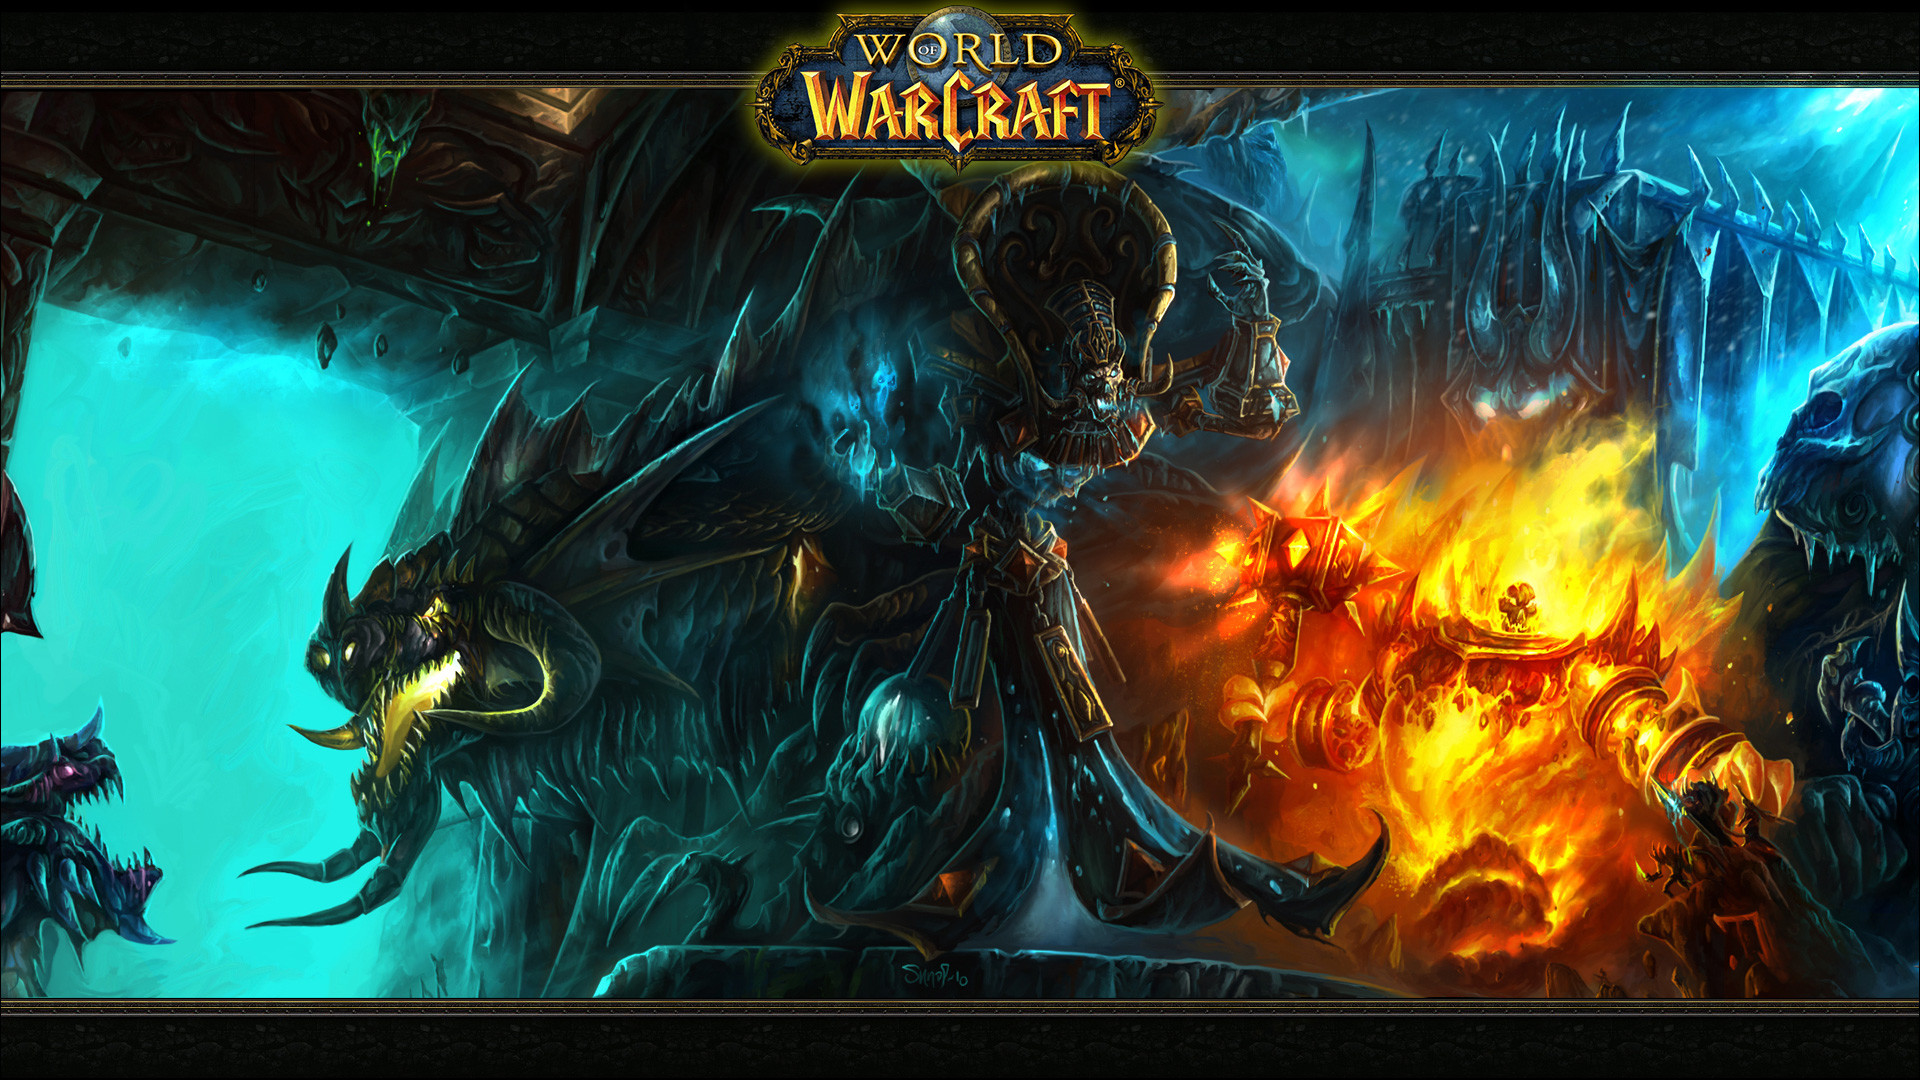 1920x1080 World of Warcraft | World of Warcraft wow desktop Full HD Wallpapers and  Desktop Backgrounds HD Images | Pinterest | Wallpaper and Desktop  backgrounds